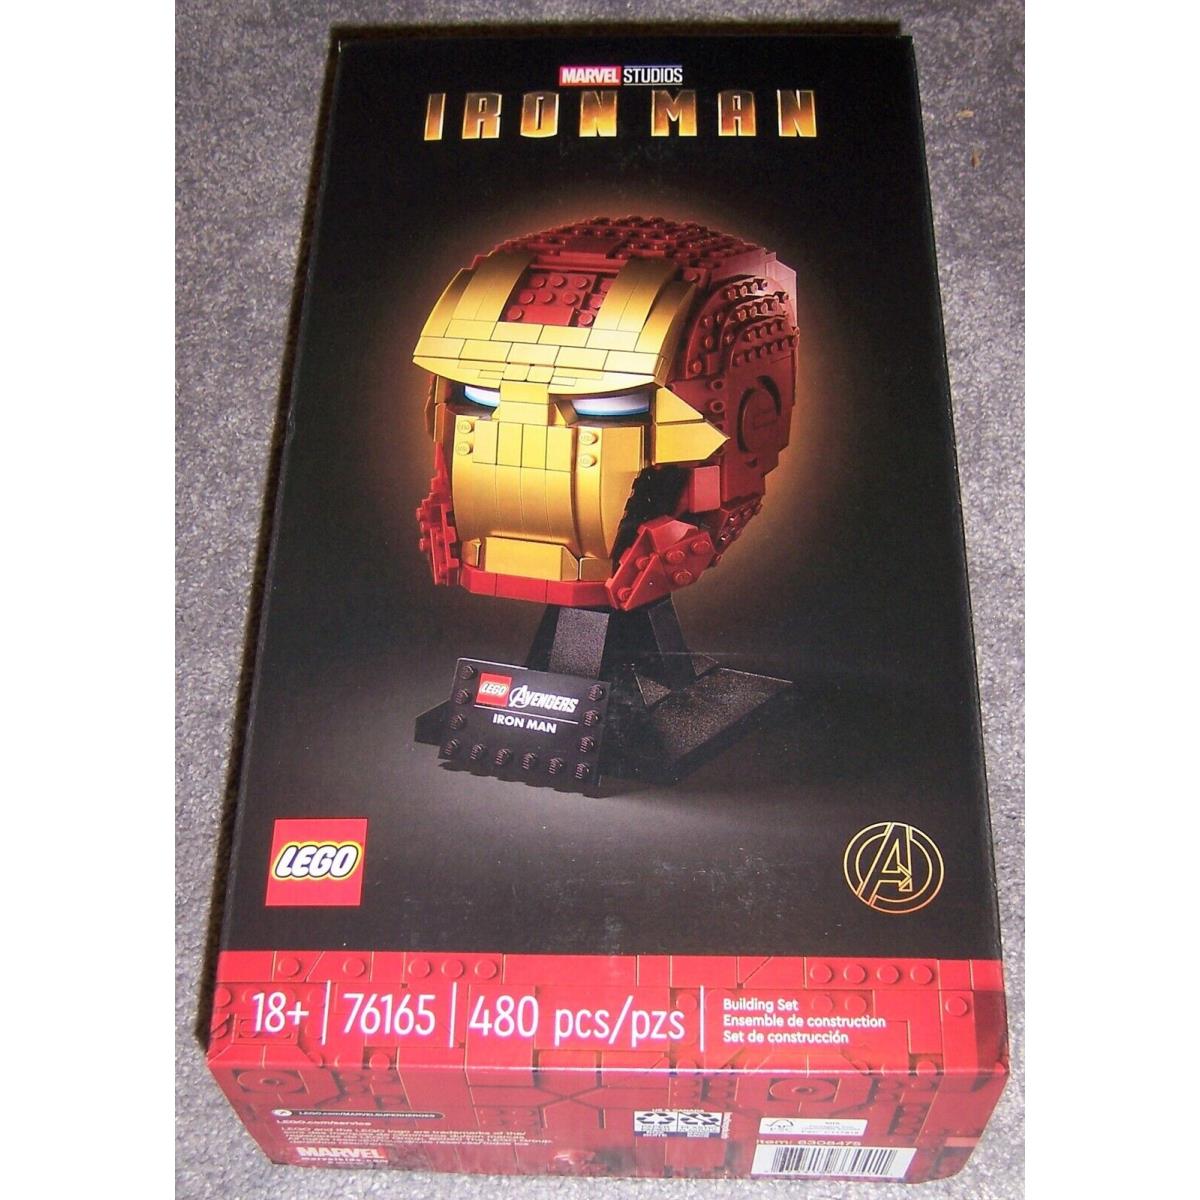 Lego Marvel Studios Iron Man Helmet 76165 Avengers Building Set 480 Pieces